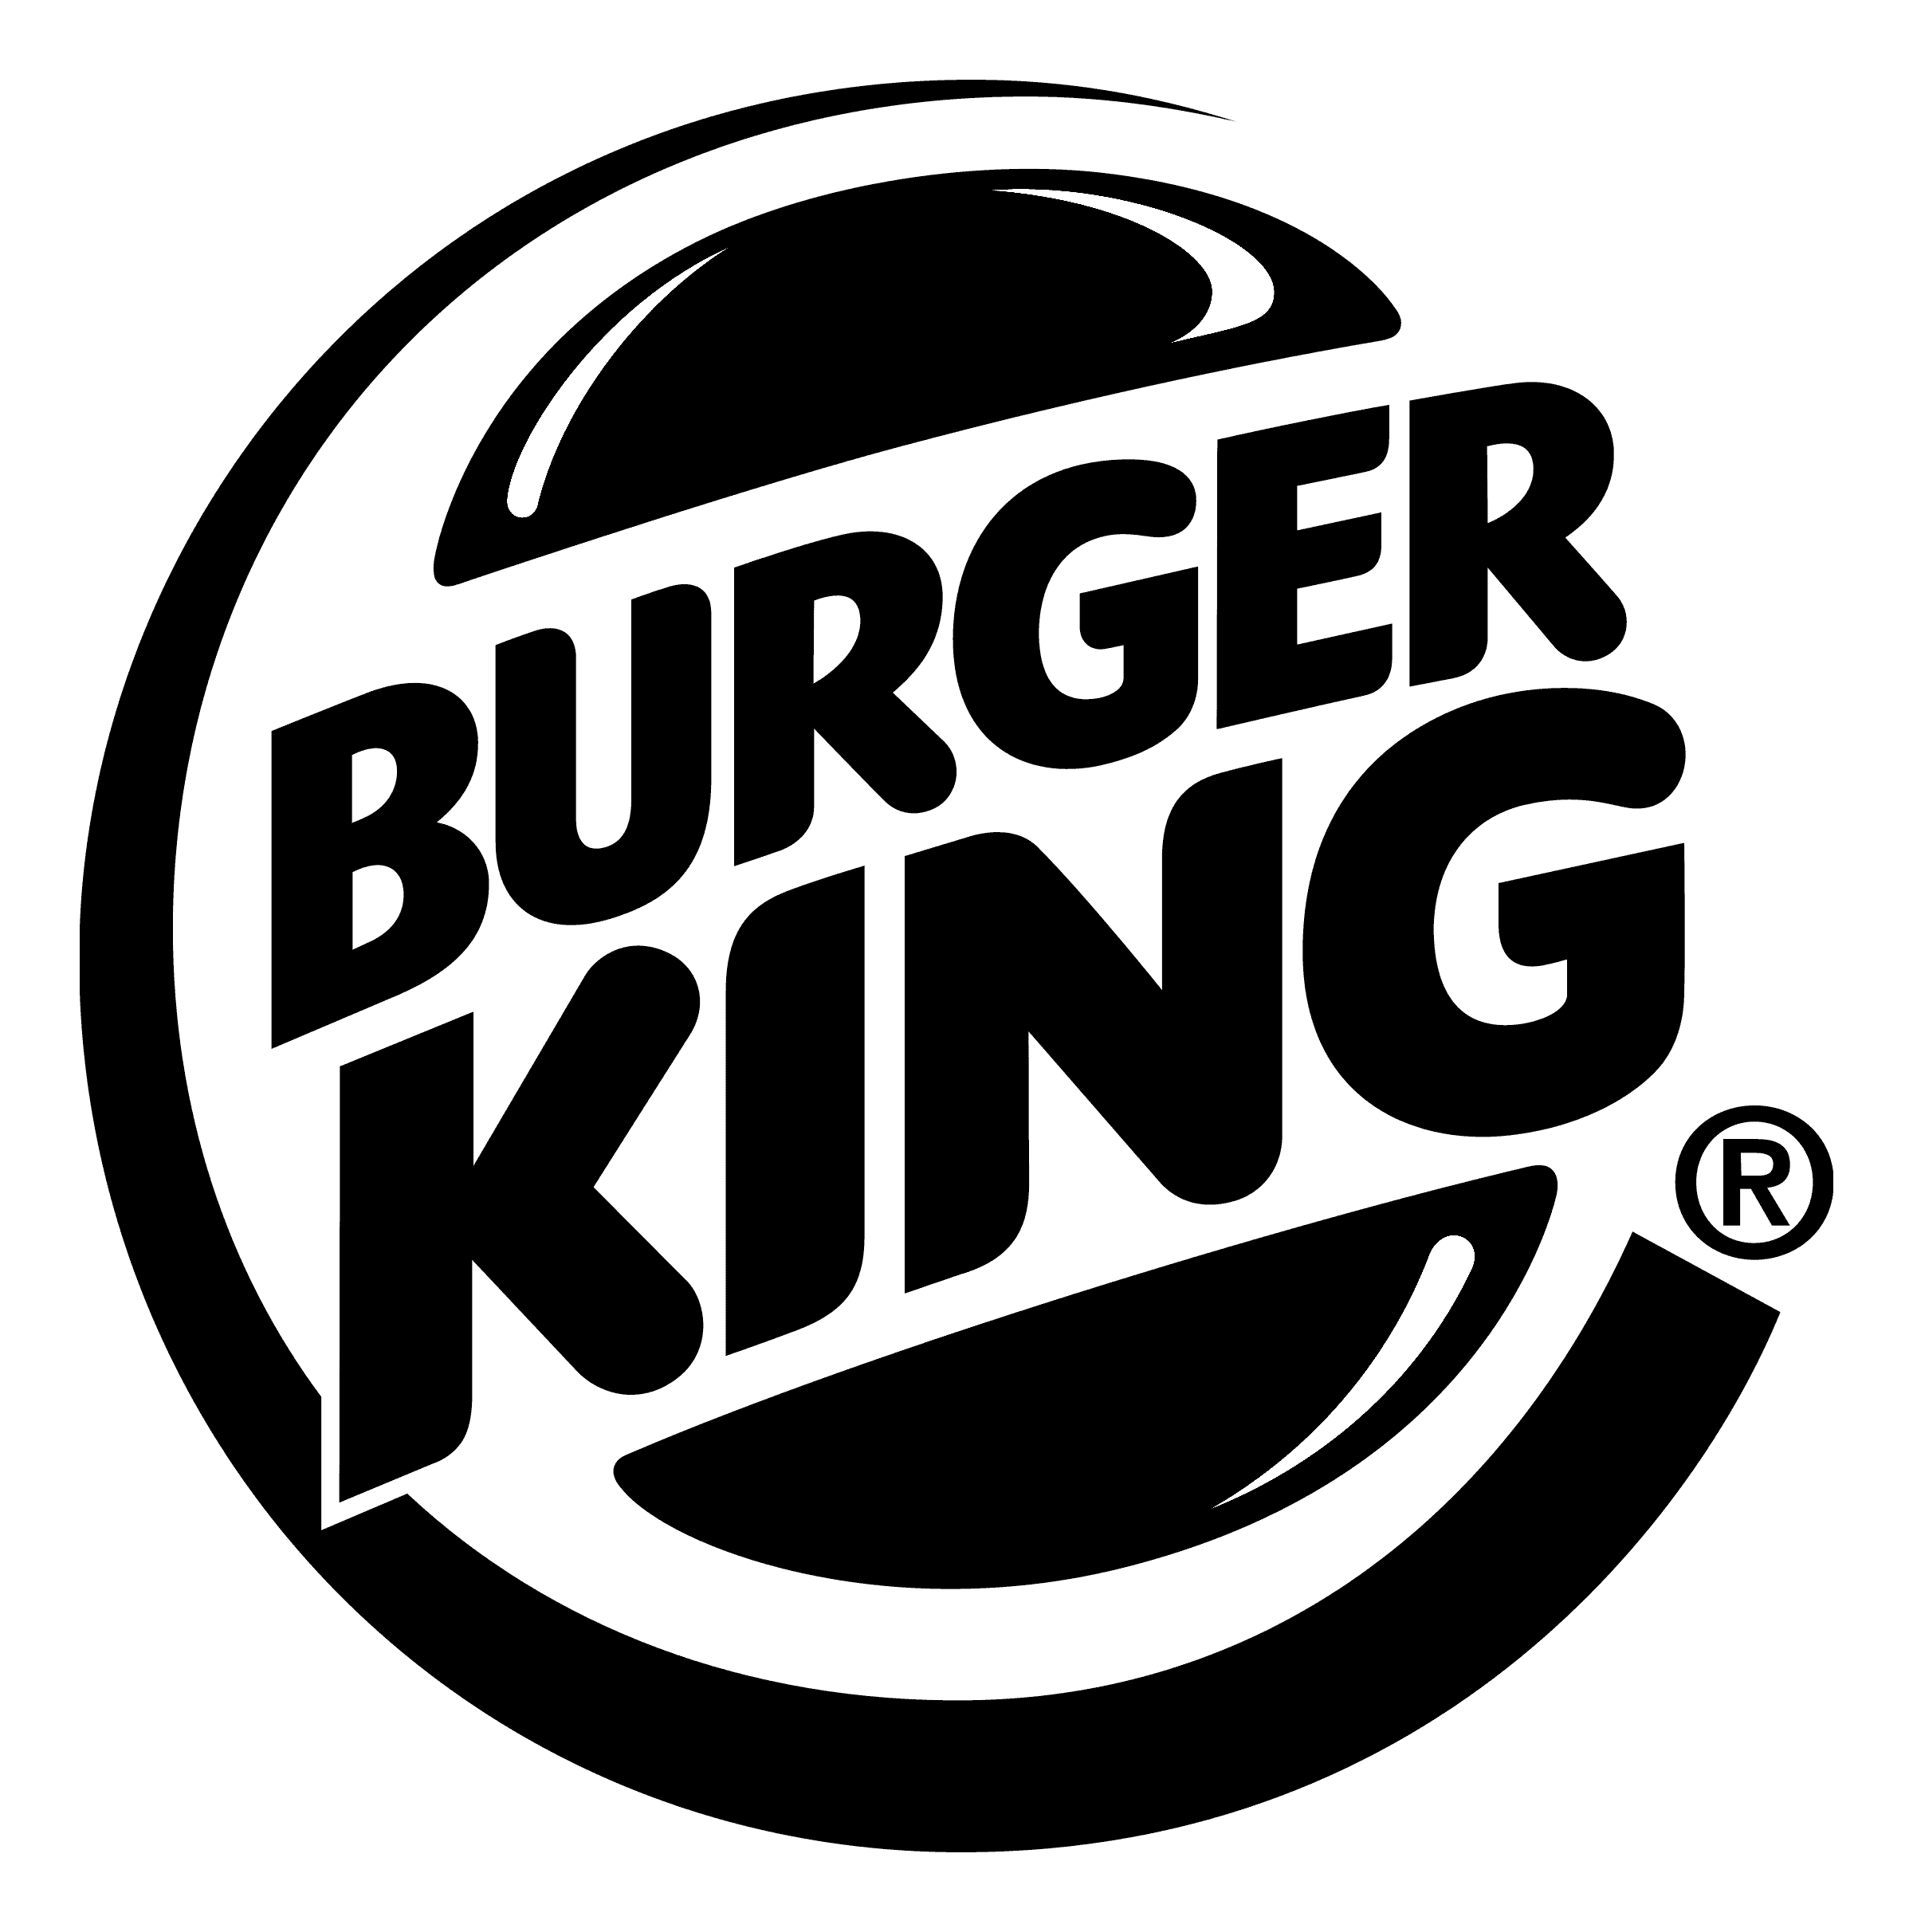 Burger King logo black and white